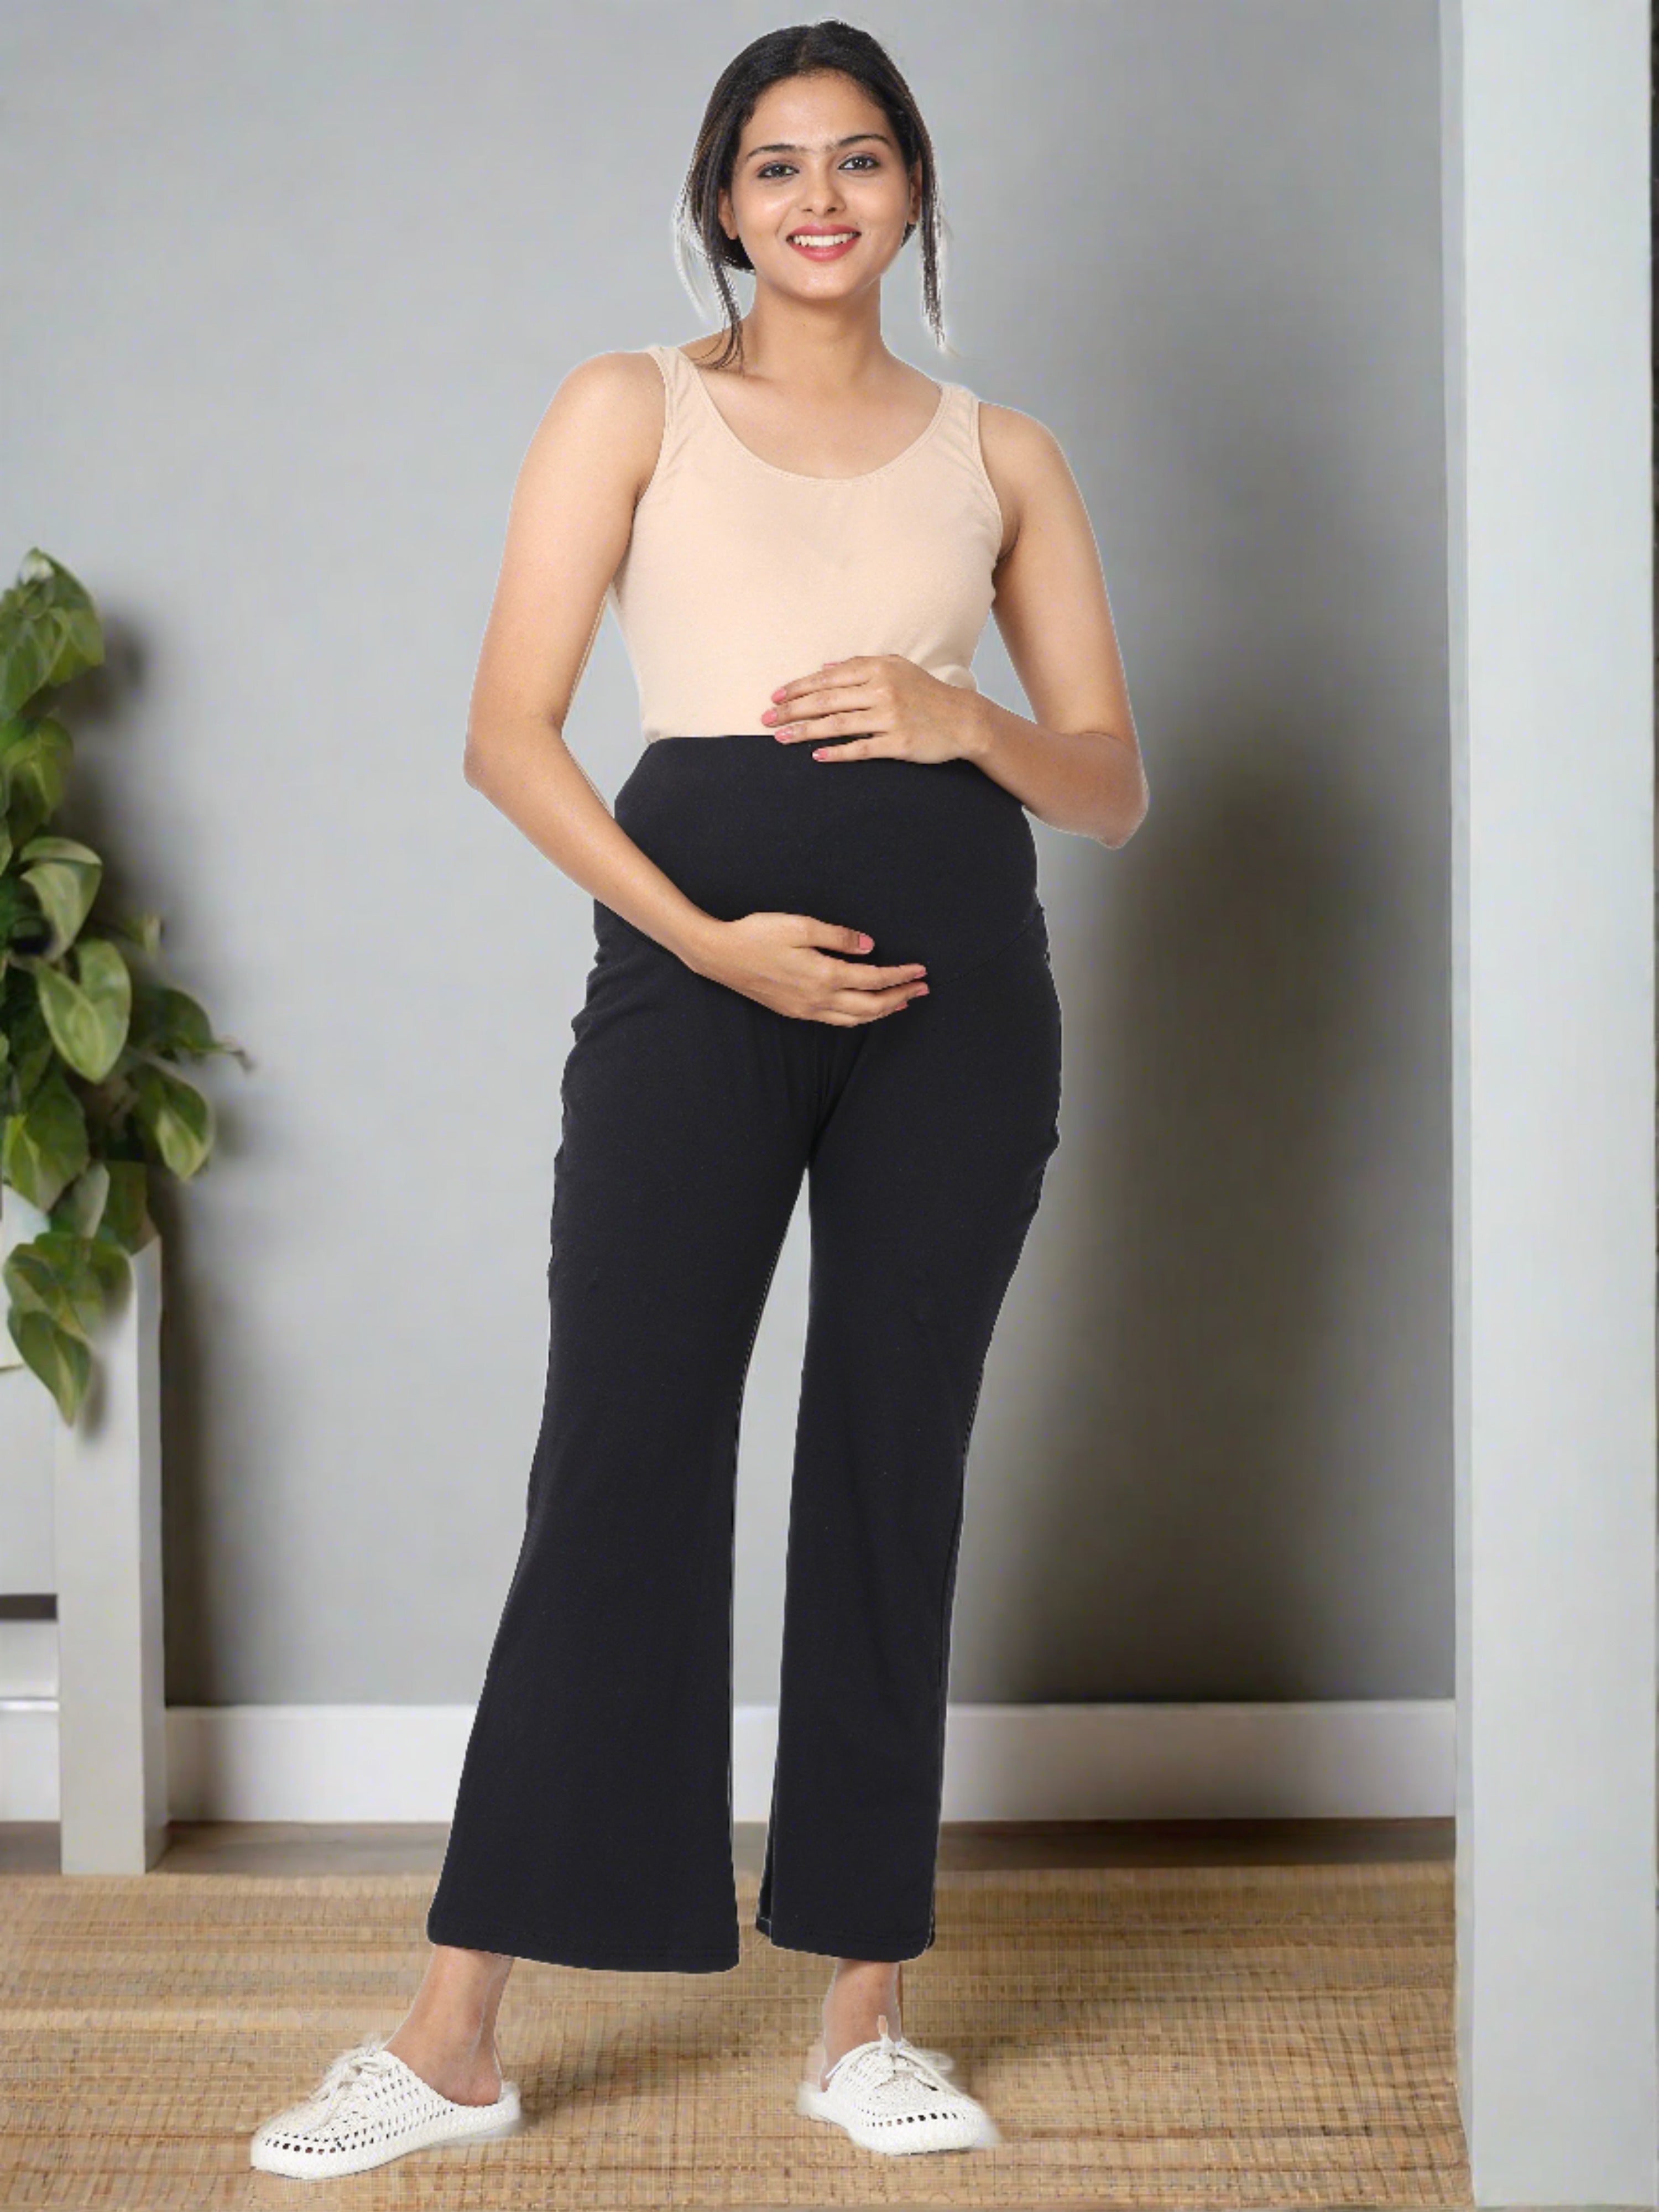 Pregnancy Clothes | Maternity clothes, Comfortable maternity clothes,  Maternity dress online